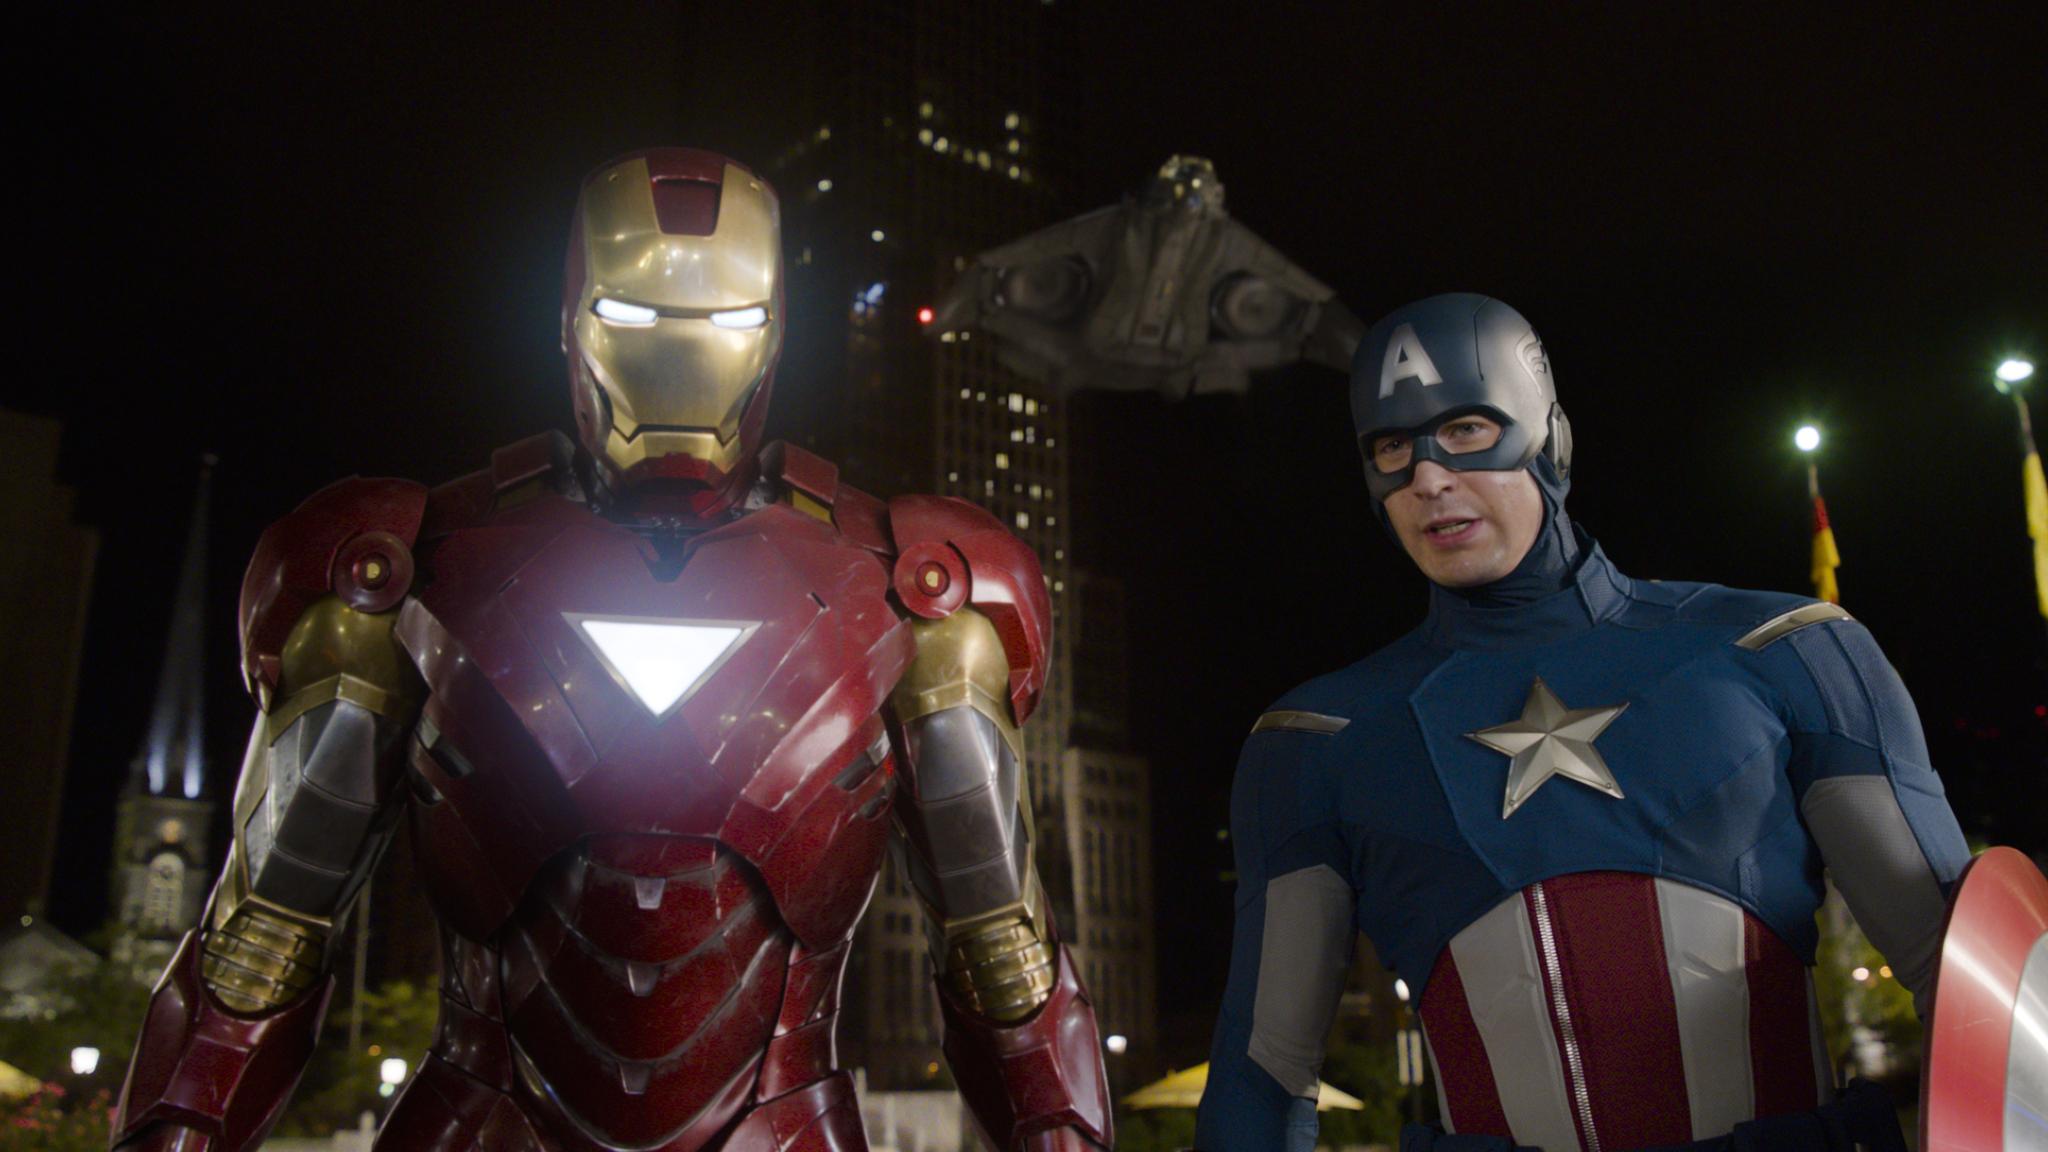 the, Avengers, Movies, Comics, Superhero, Captain, America, Iron, Man Wallpaper